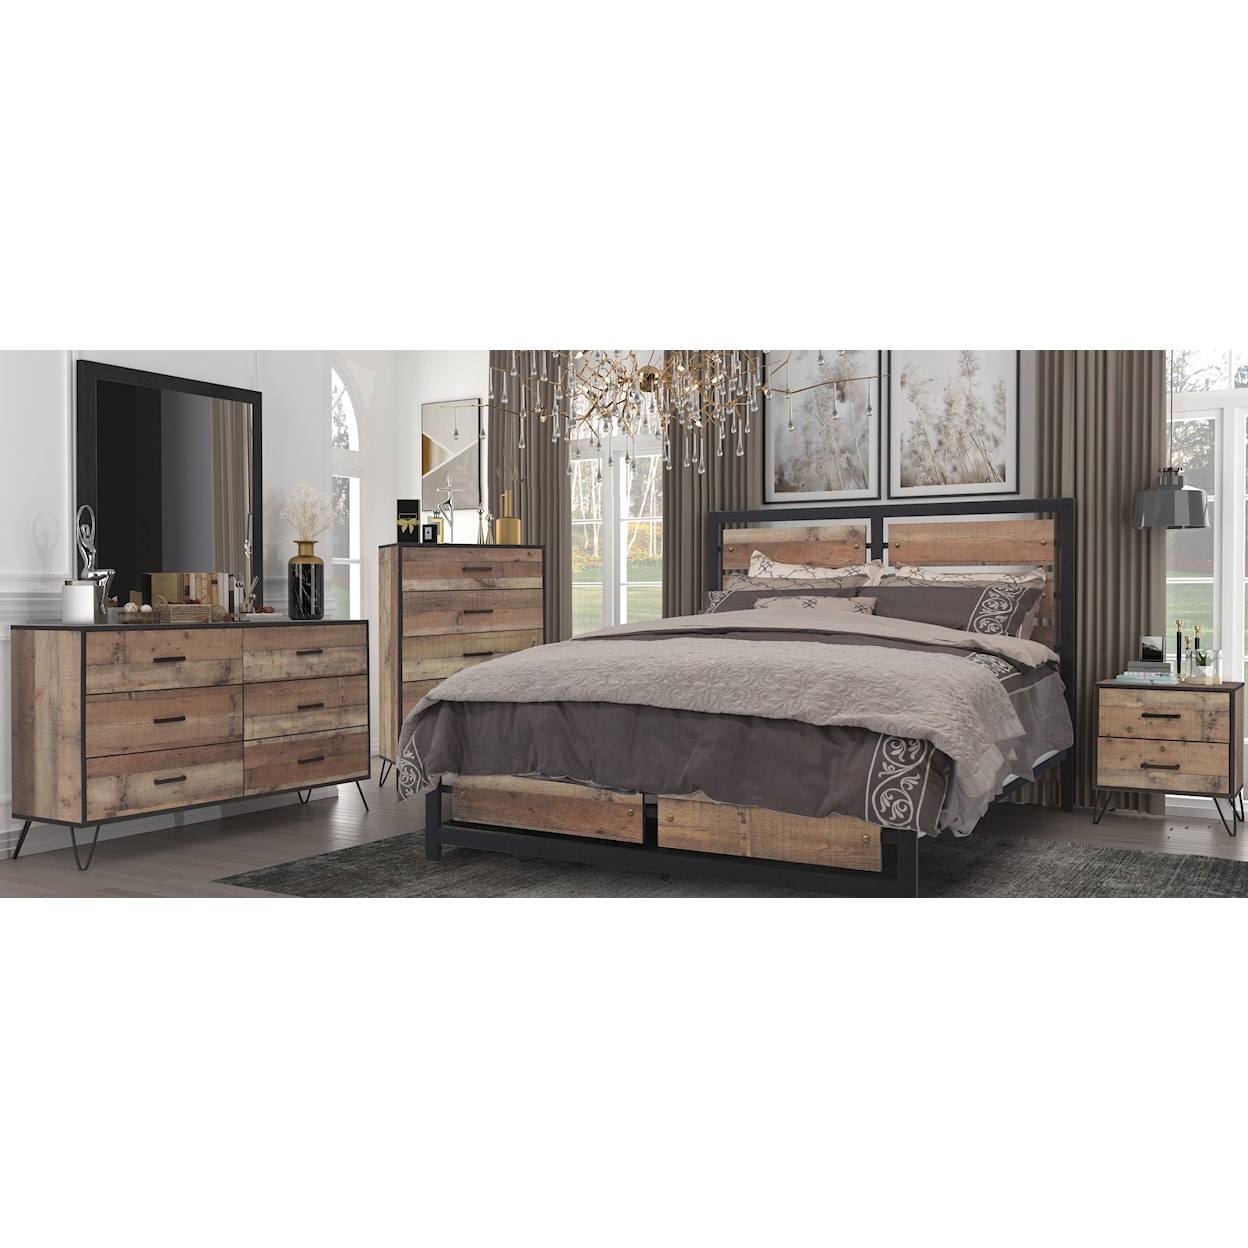 New Classic Furniture Elk River Twin Bedroom Set